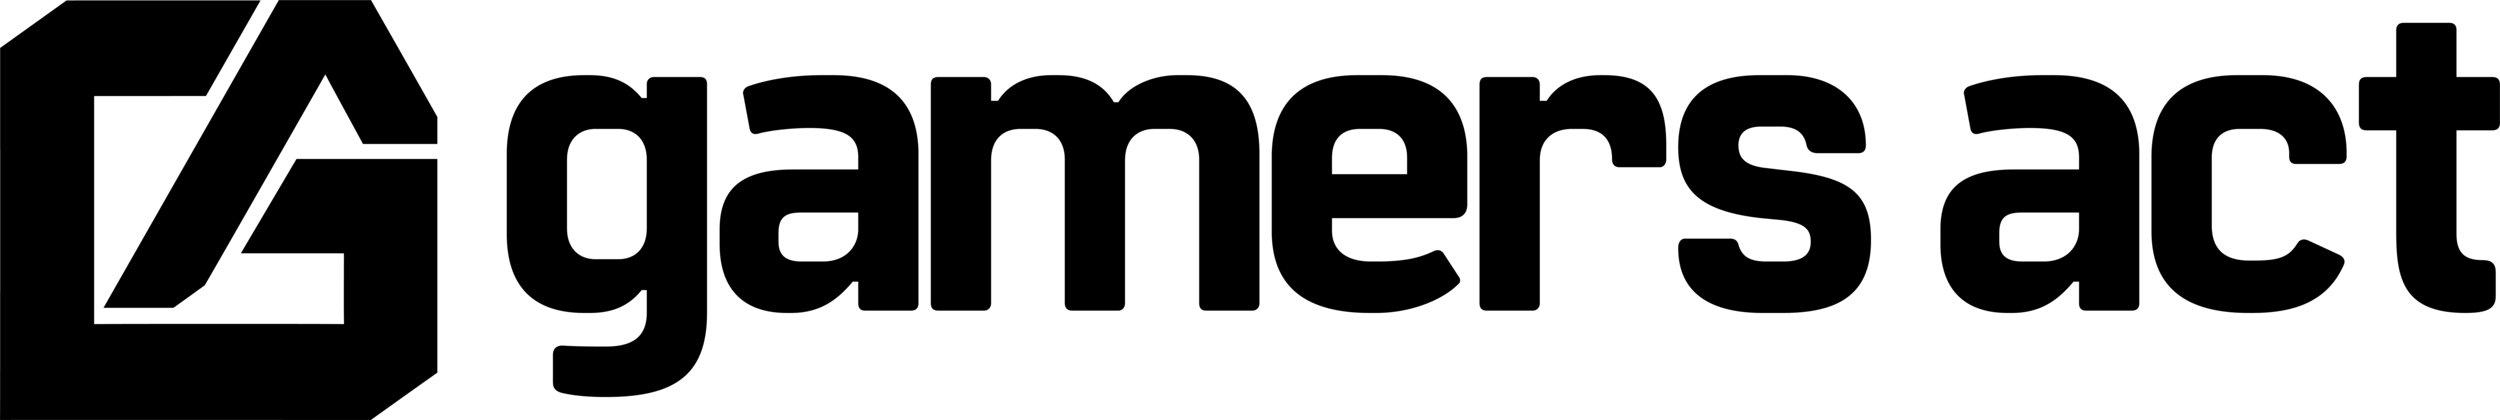 GamersAct-Logo-Light-Background.png